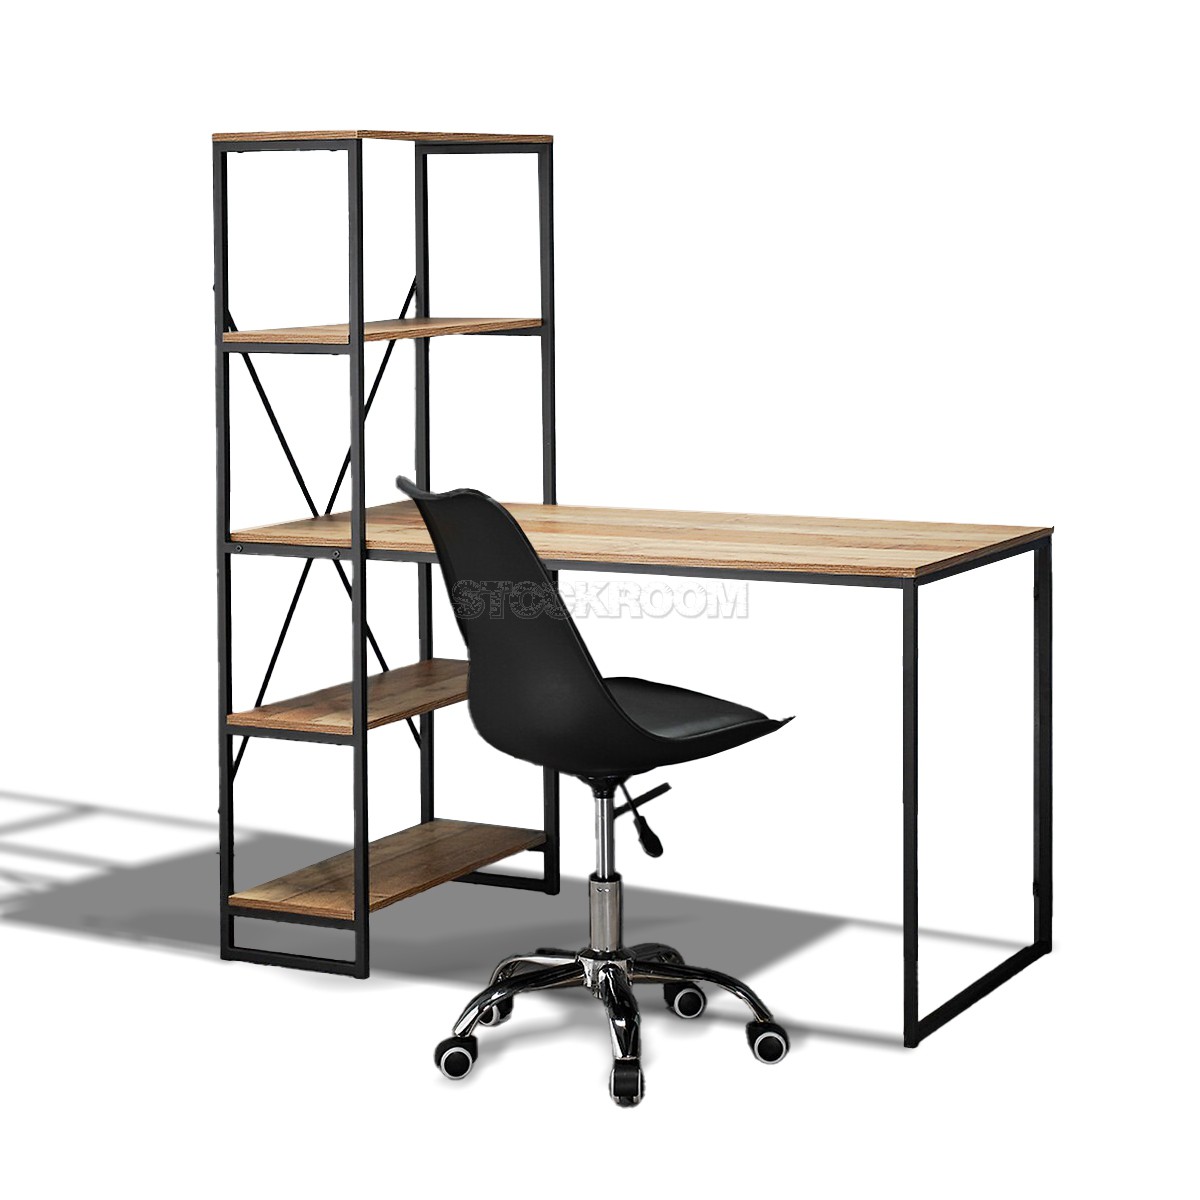 Greyson Work Desk With Storage Shelves / Study desk